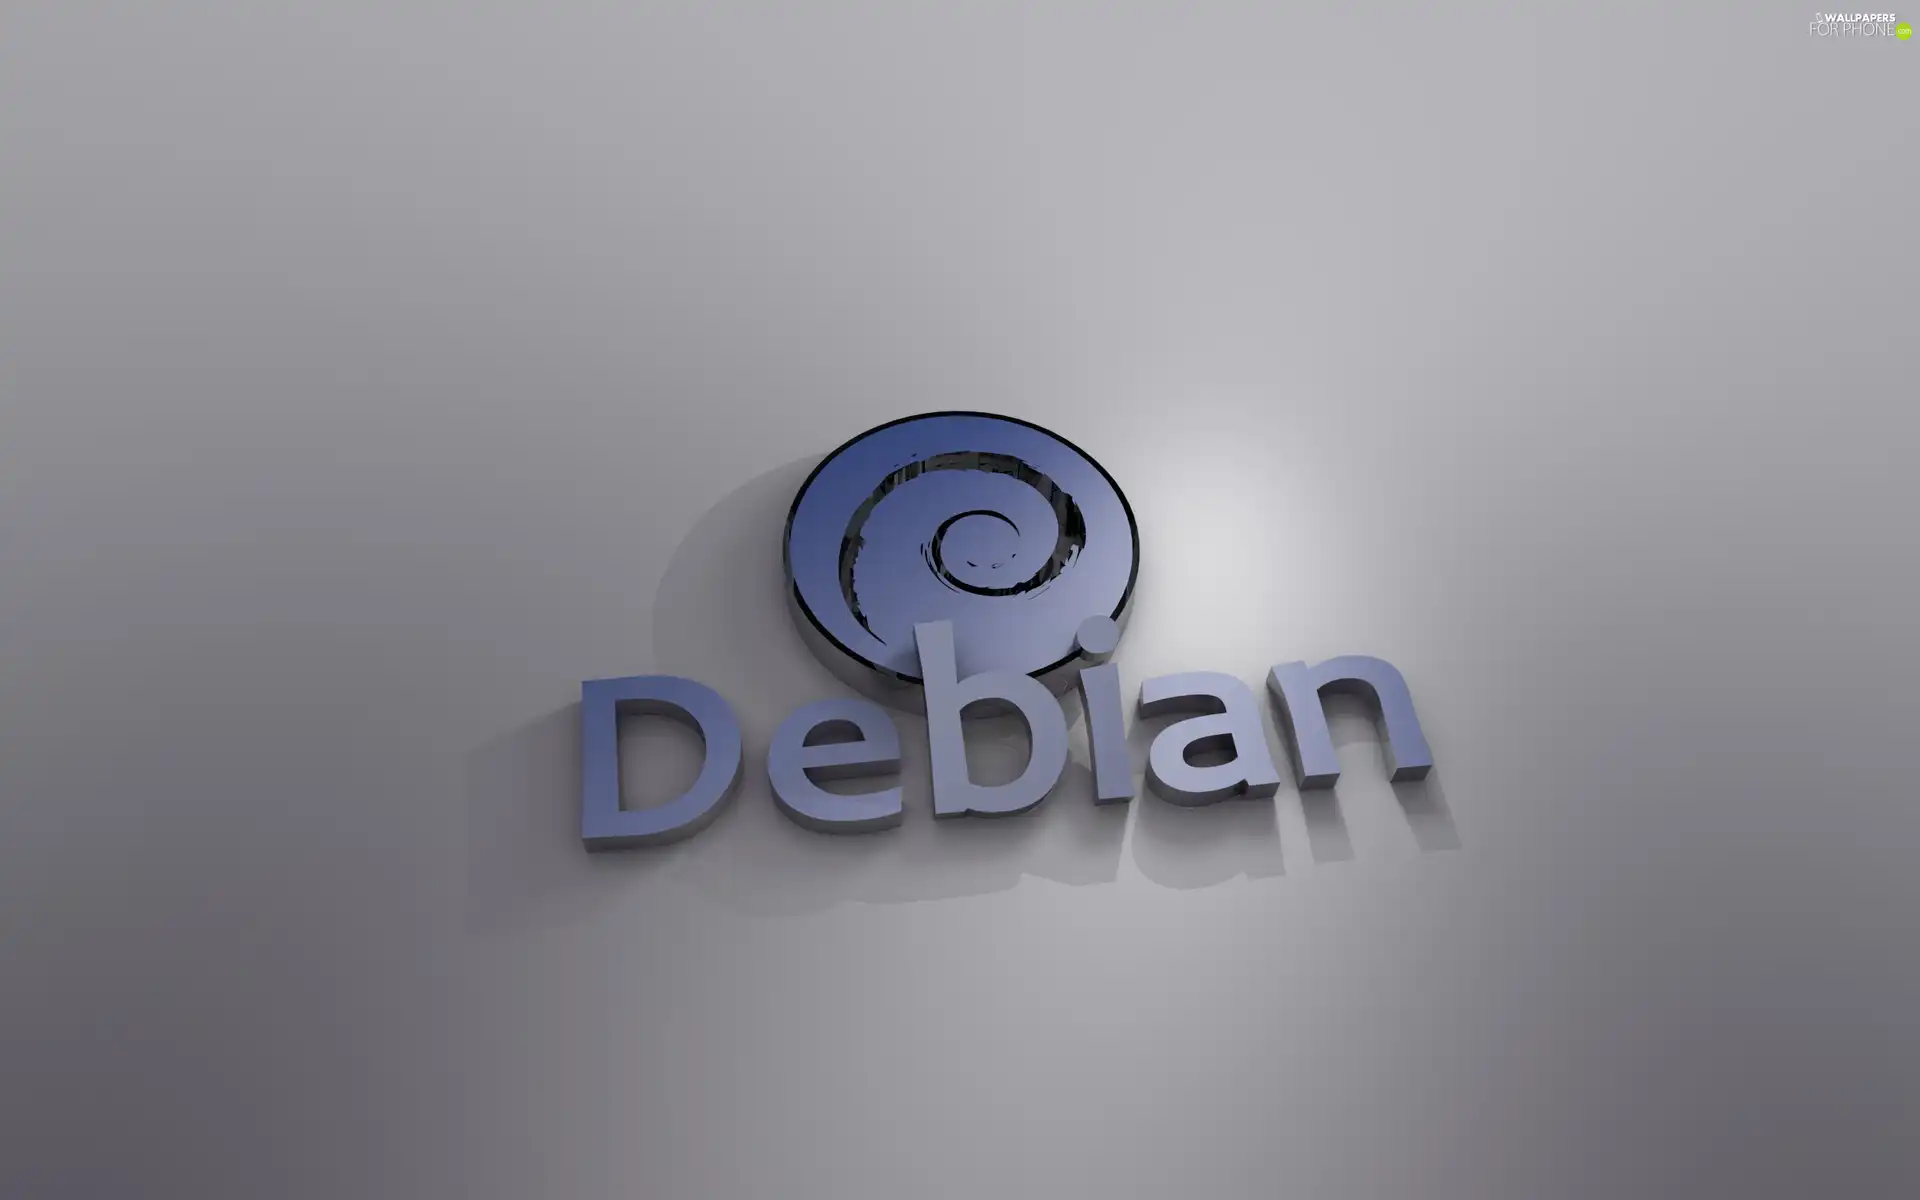 cardboard, Debian, spiral